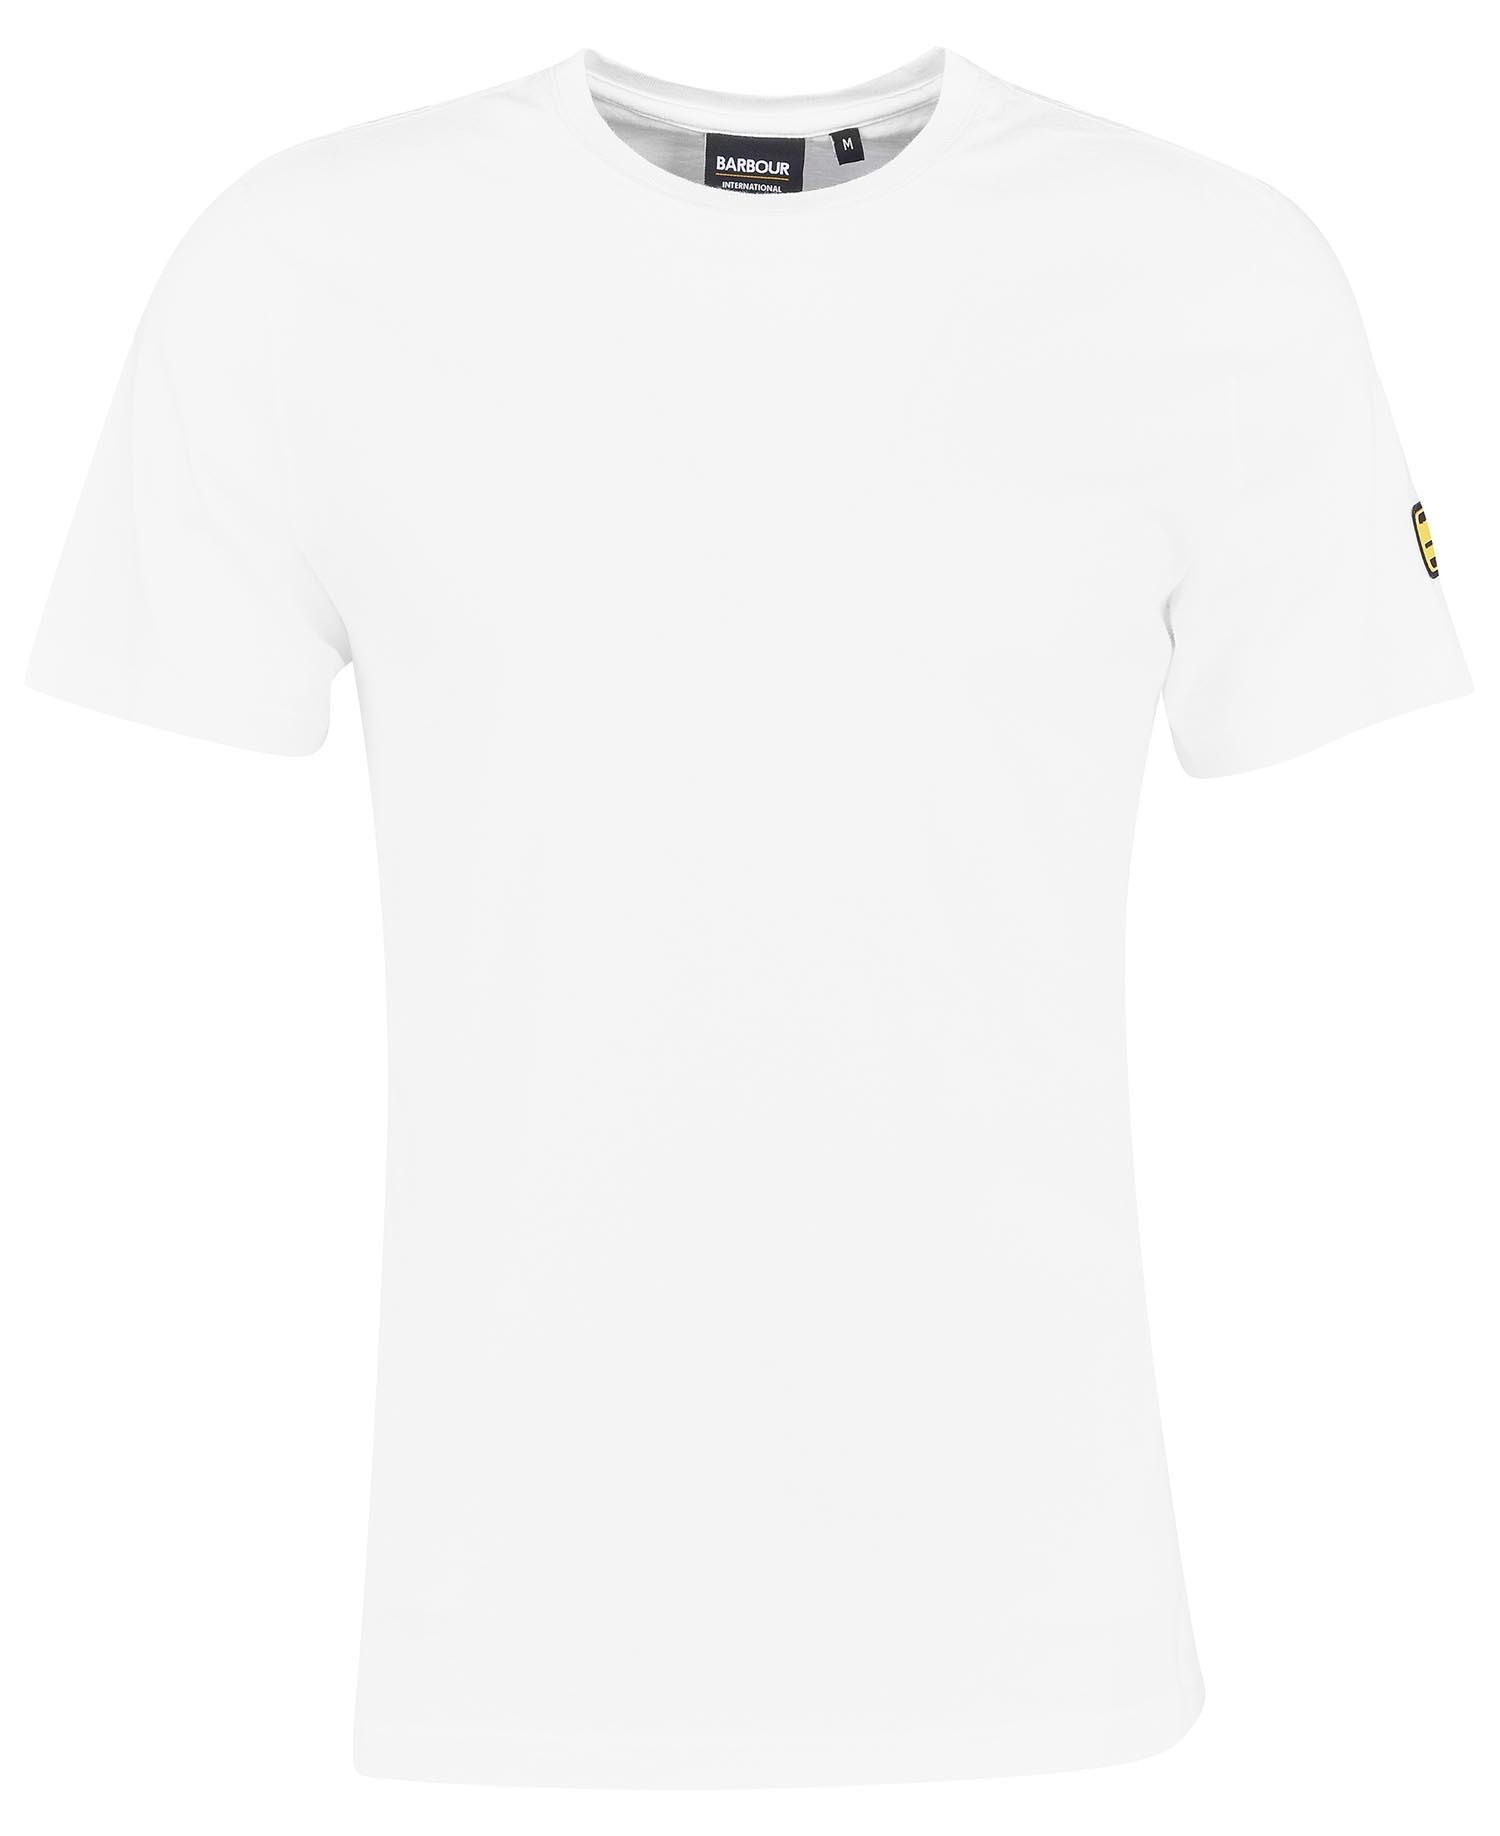 Barbour Arm Badge Devise T-shirt White for Men | Lyst